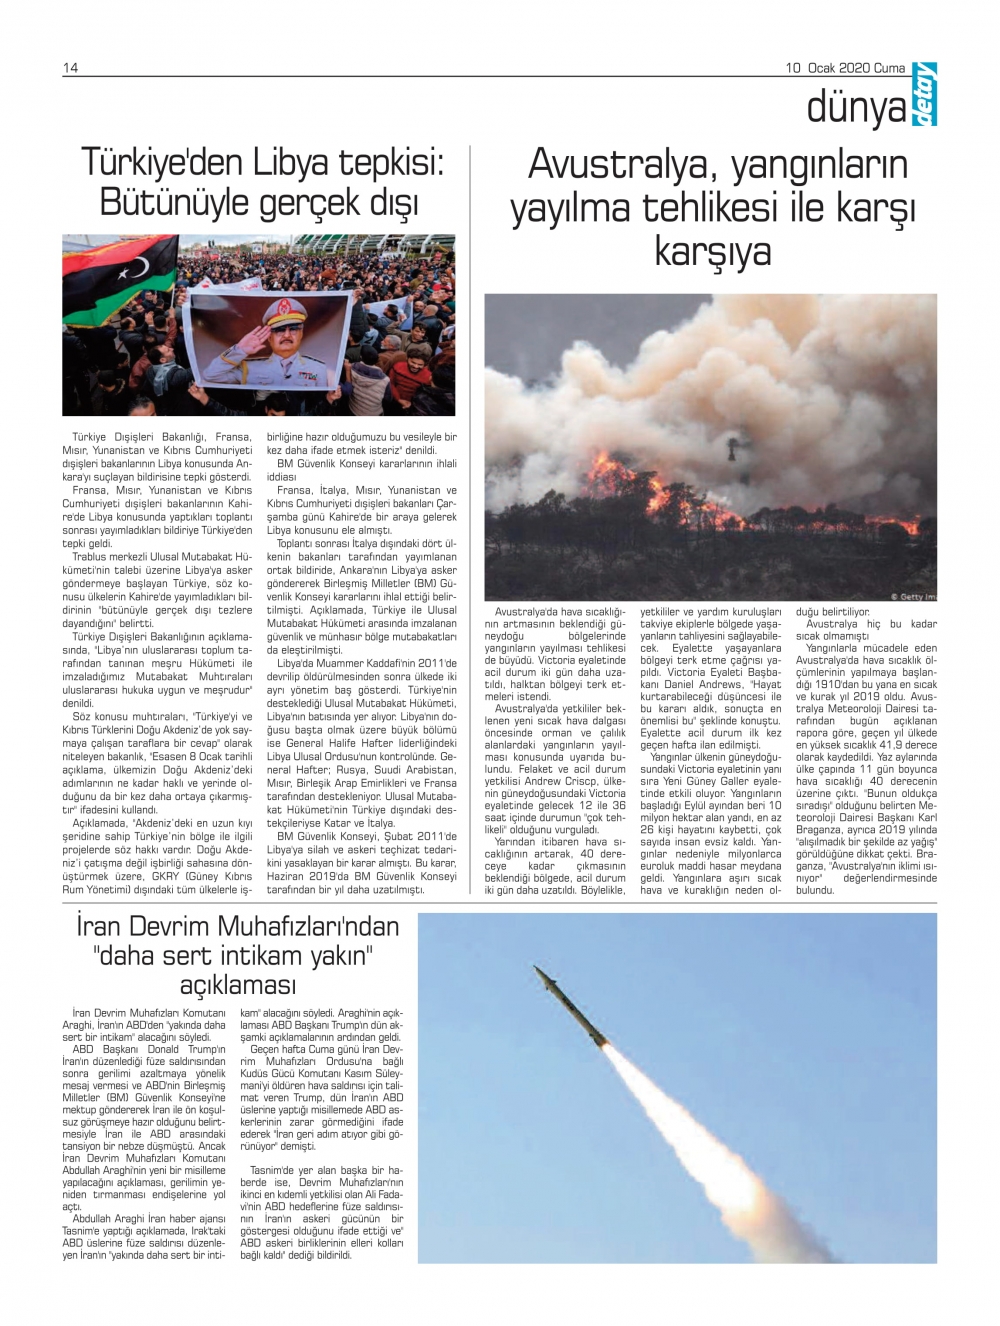 Detay Gazetes 10 Ocak 2020 galerisi resim 13